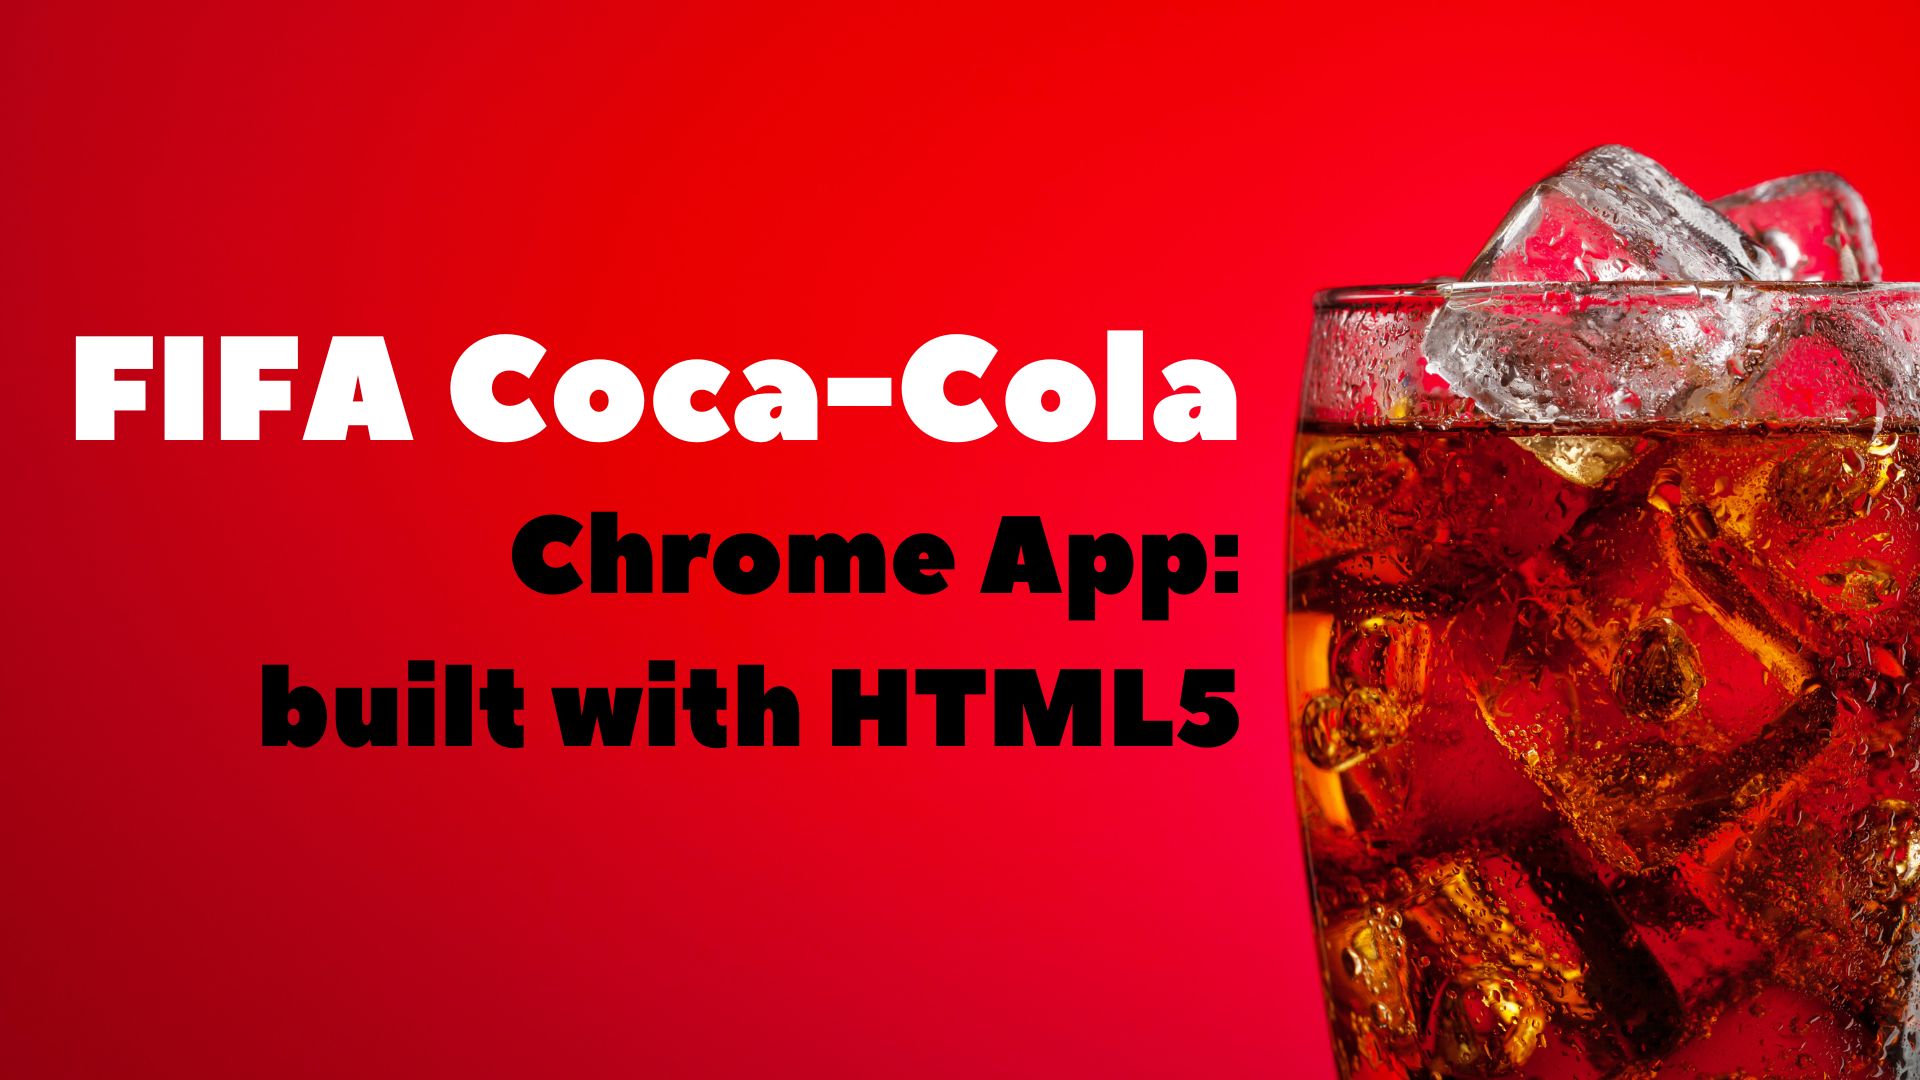 FIFA Coca-Cola® Chrome App - built with HTML5